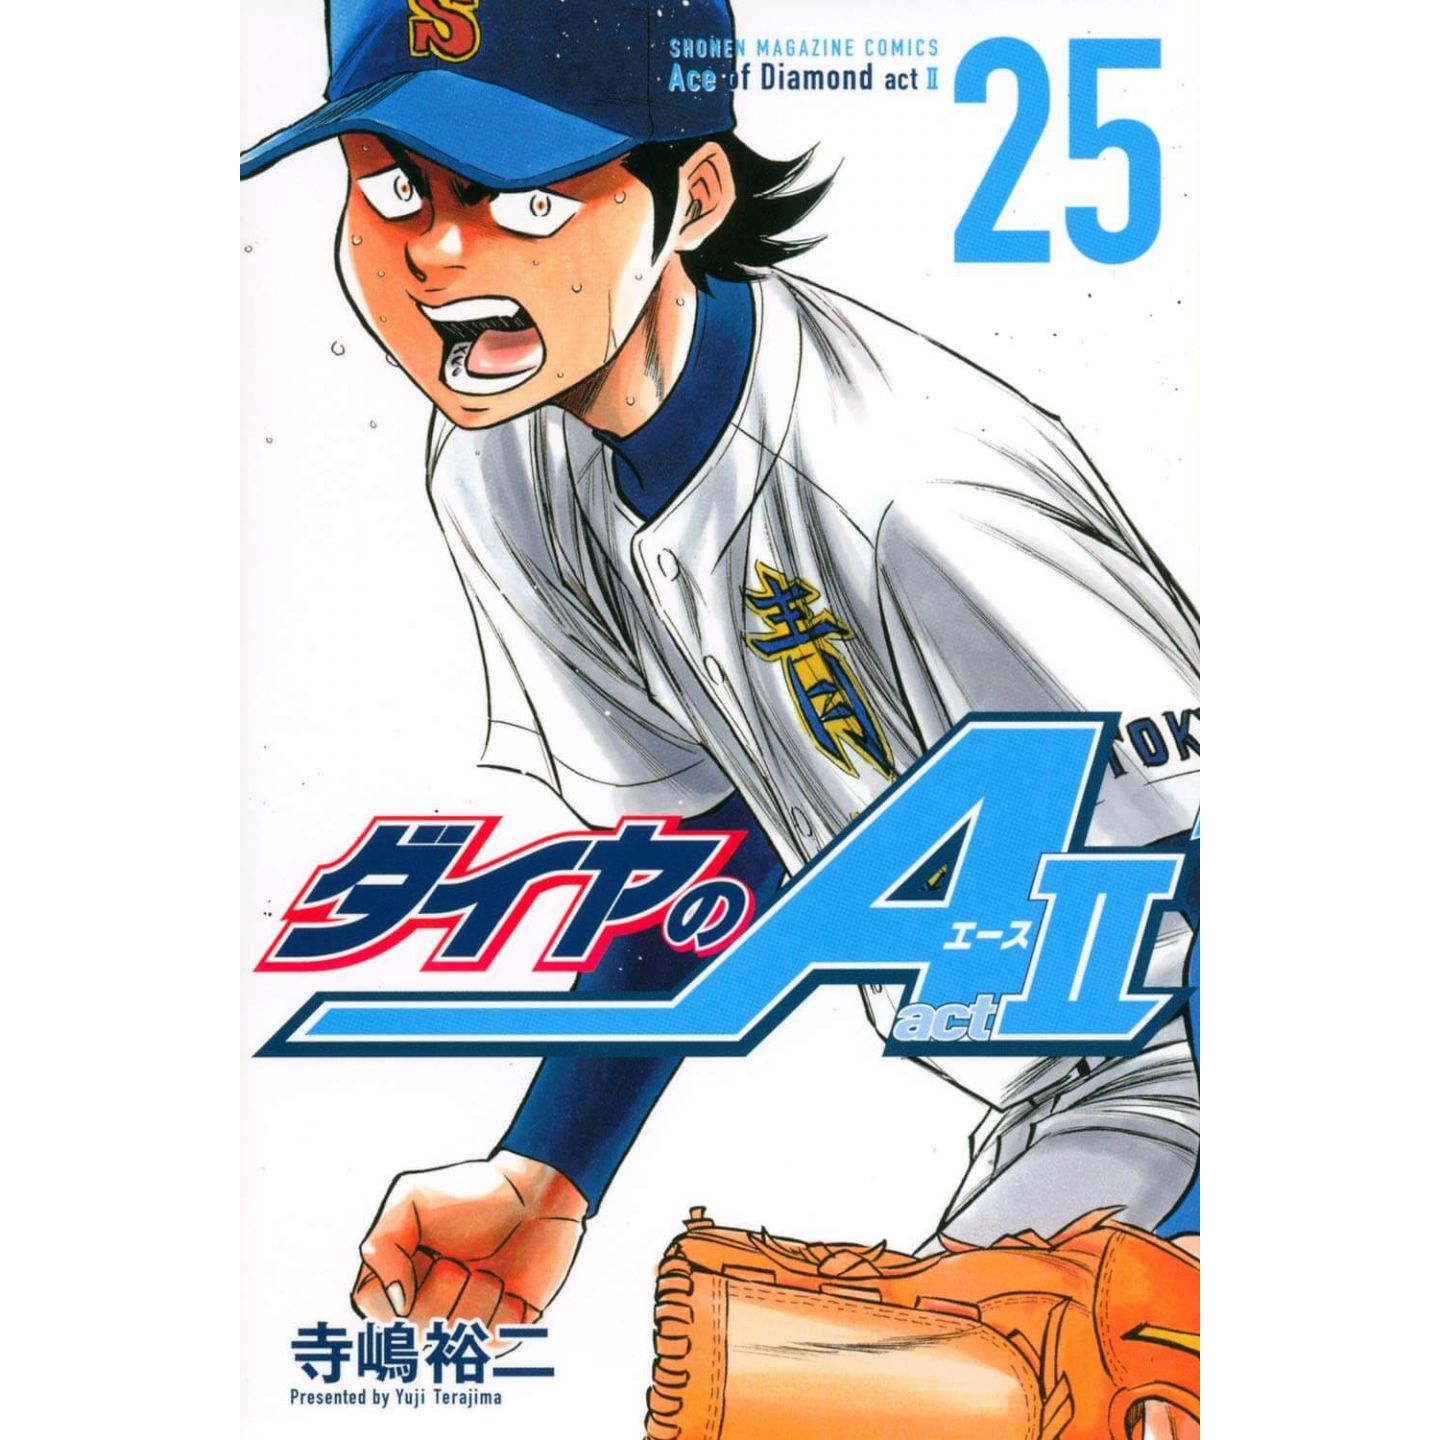 Daiya No Ace Act 2 Manga Ace of Diamond (Daiya no A) act II vol.25 - Shonen Magazine Comics  (japanese version)